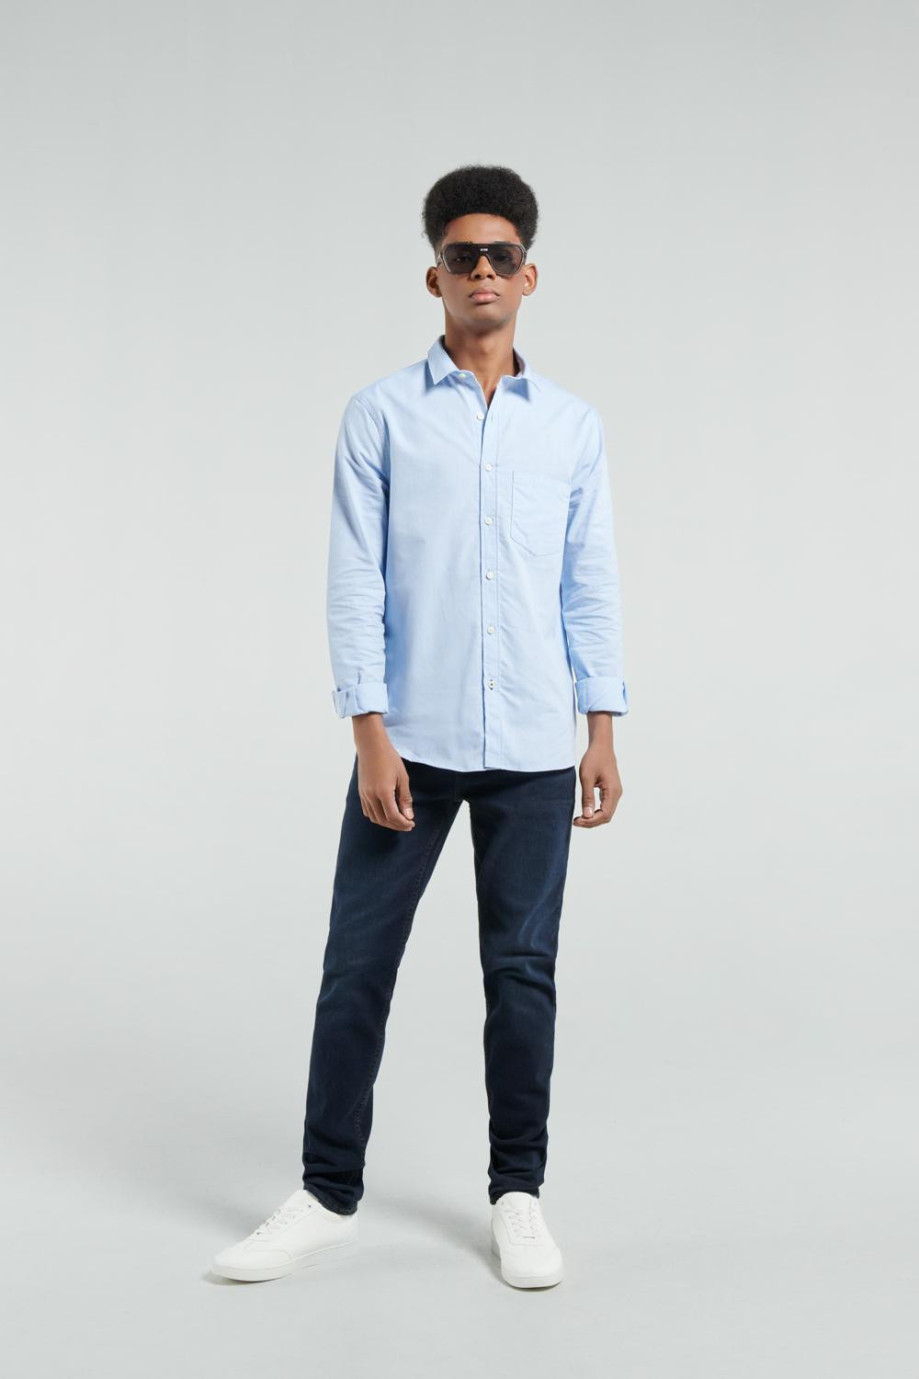 Camisa azul clara con bolsillo, cuello sport collar y manga larga